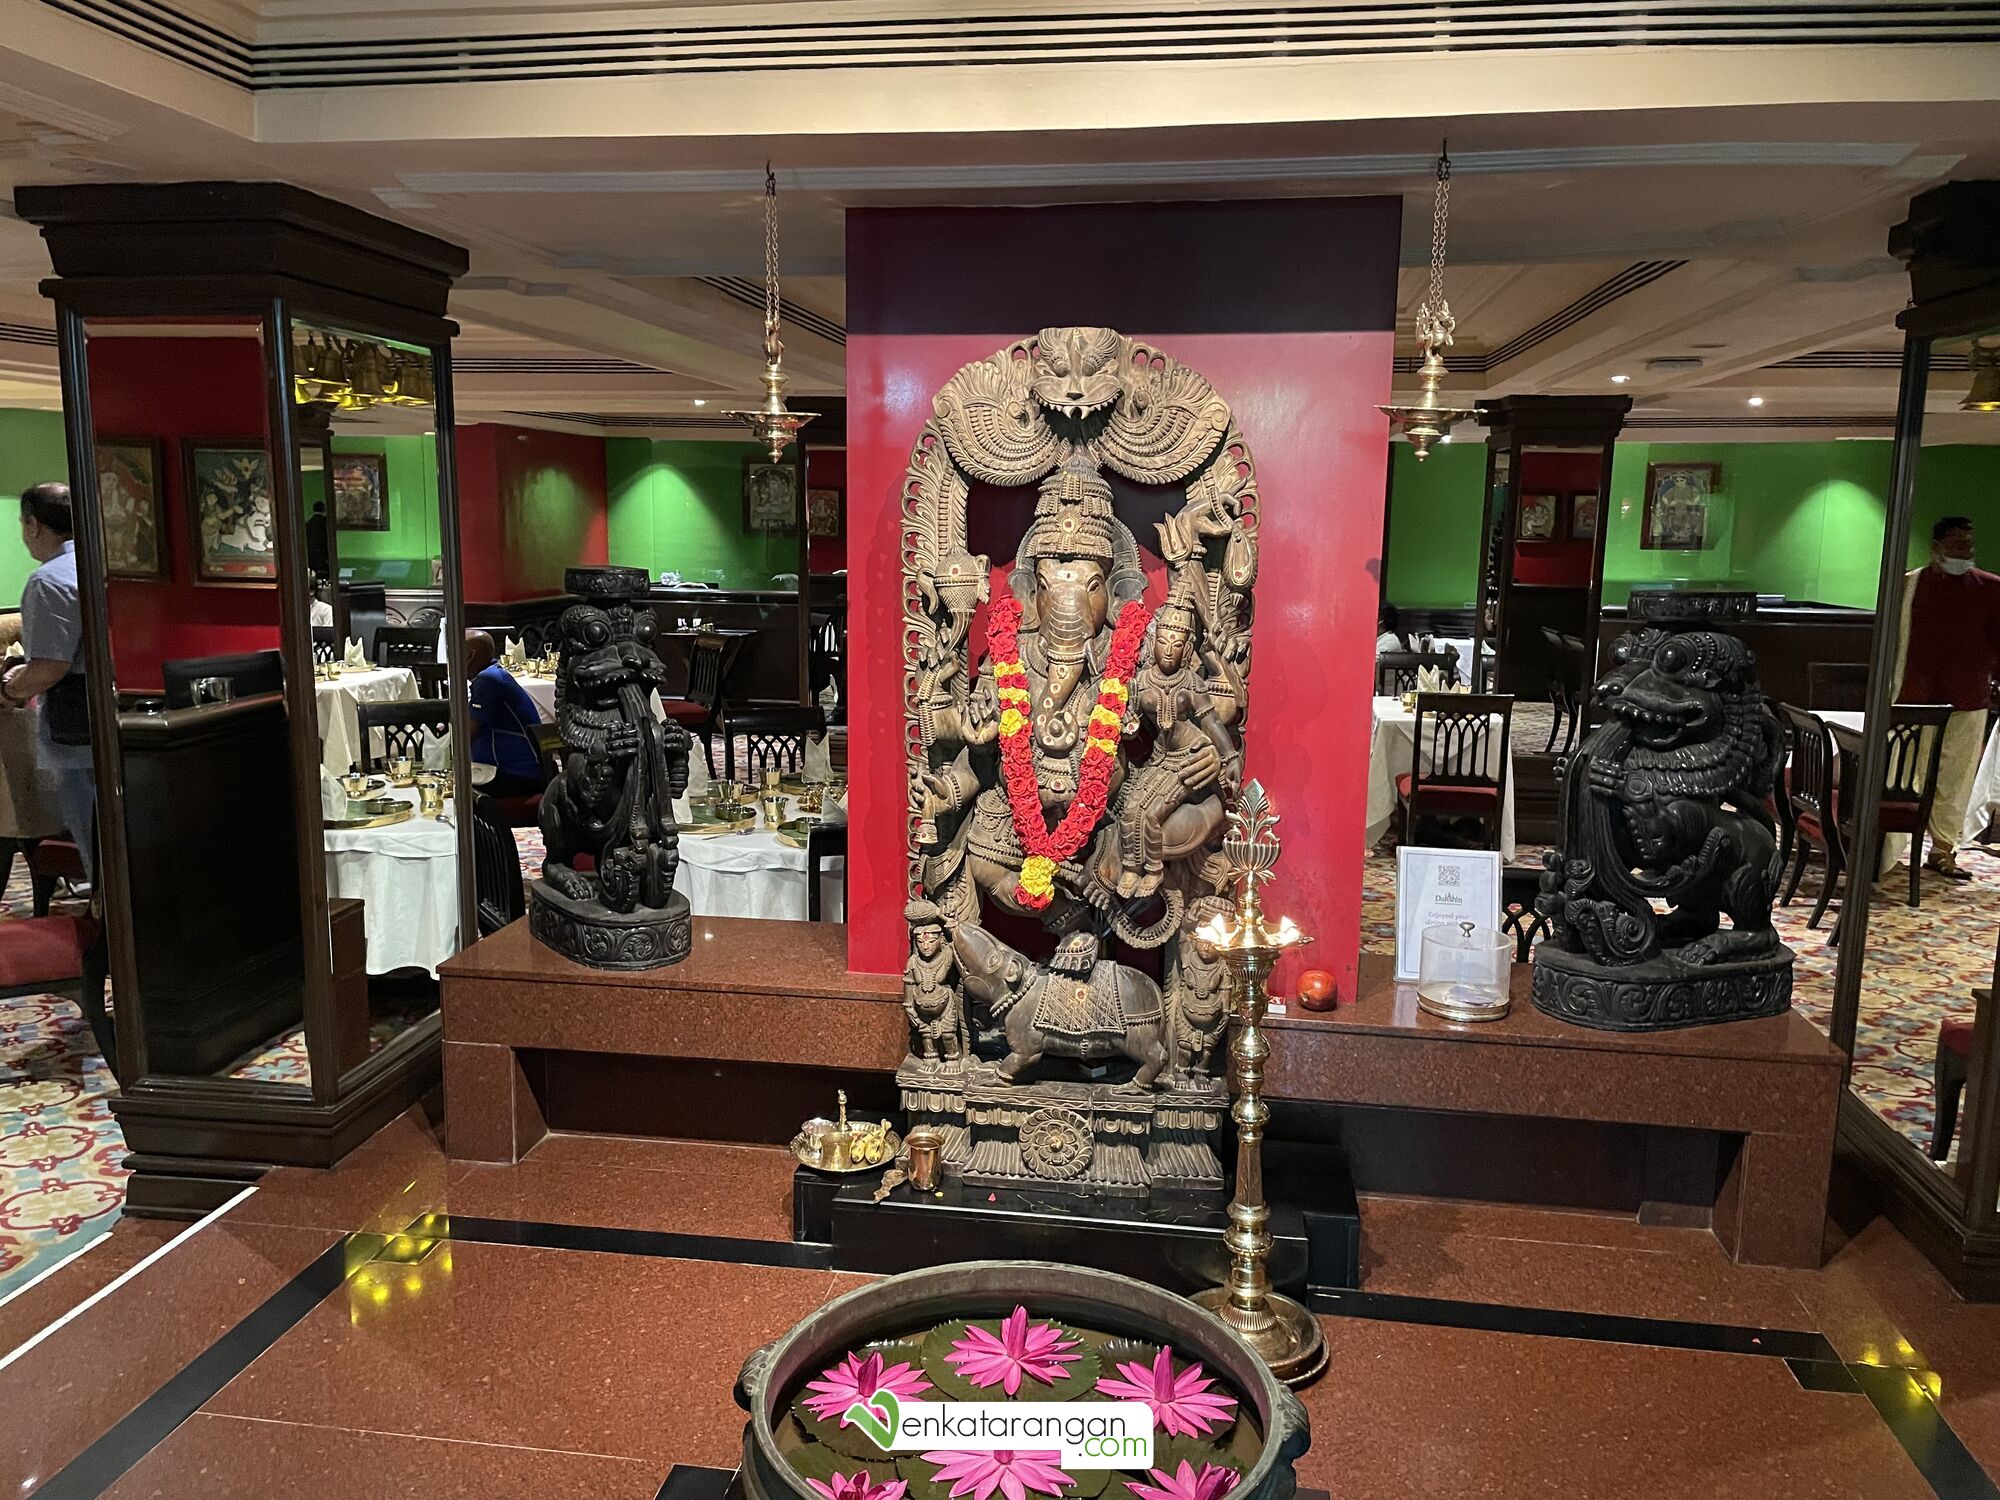 Dakshin, The South Indian Restaurant at the Adyar Gate Hotel